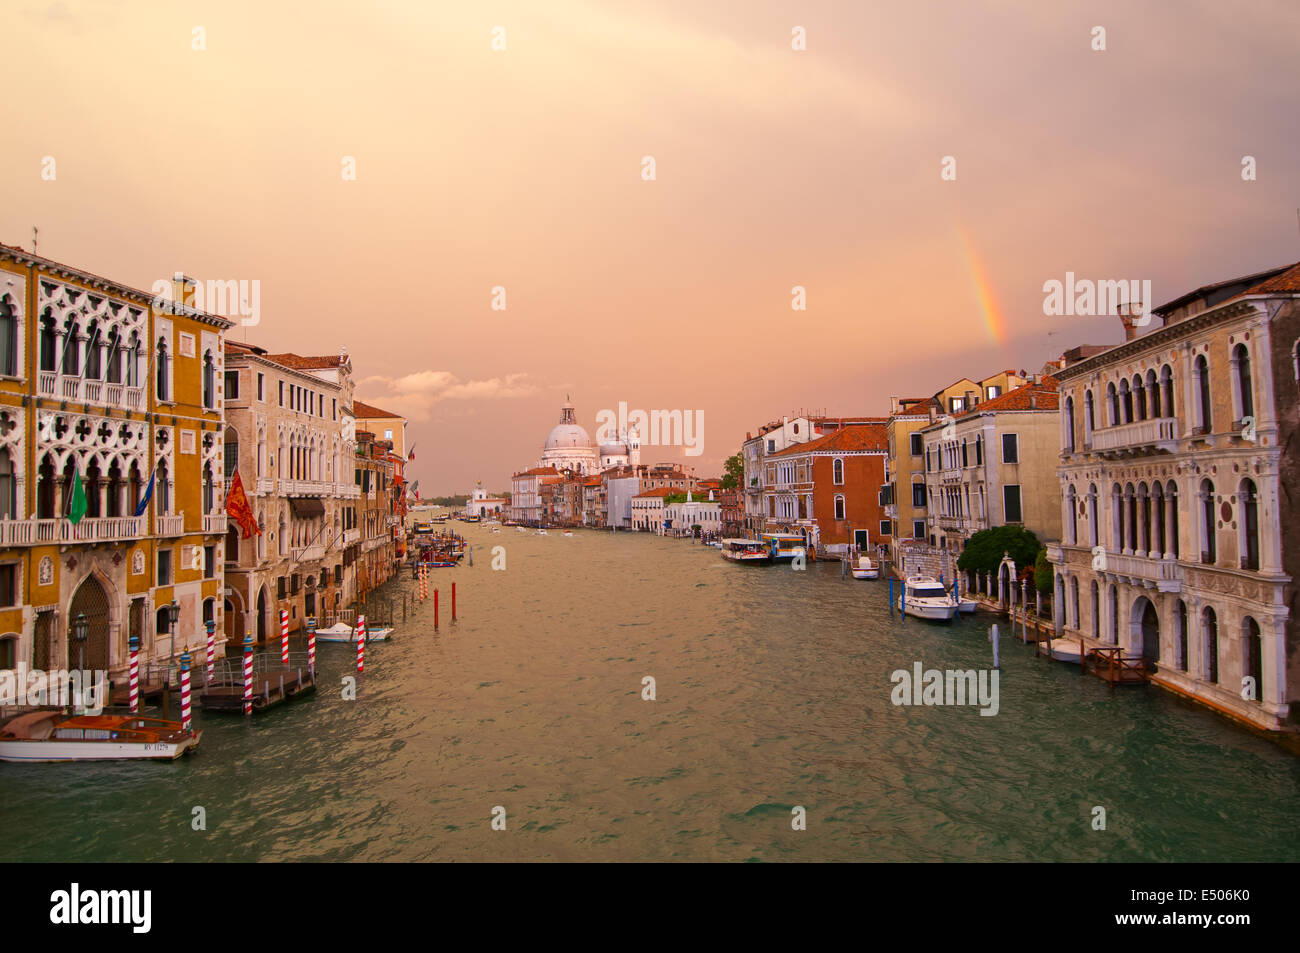 Venice Irtaly pittoresque view Stock Photo